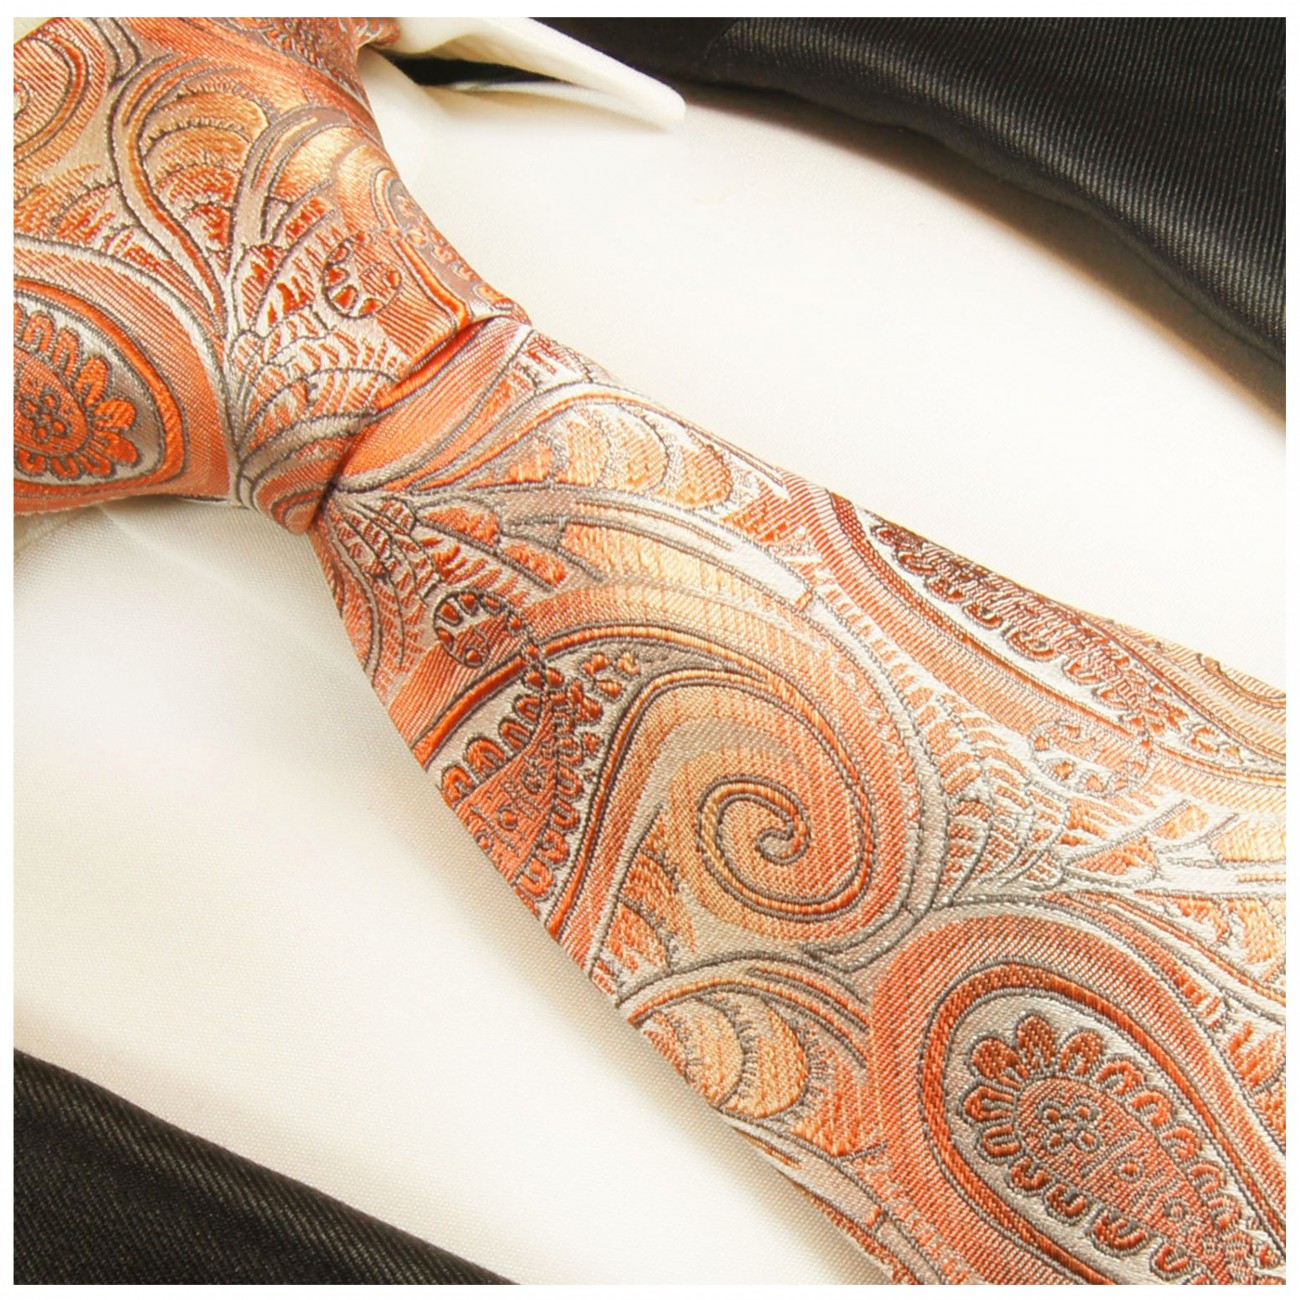 Krawatte orange grau paisley Seide